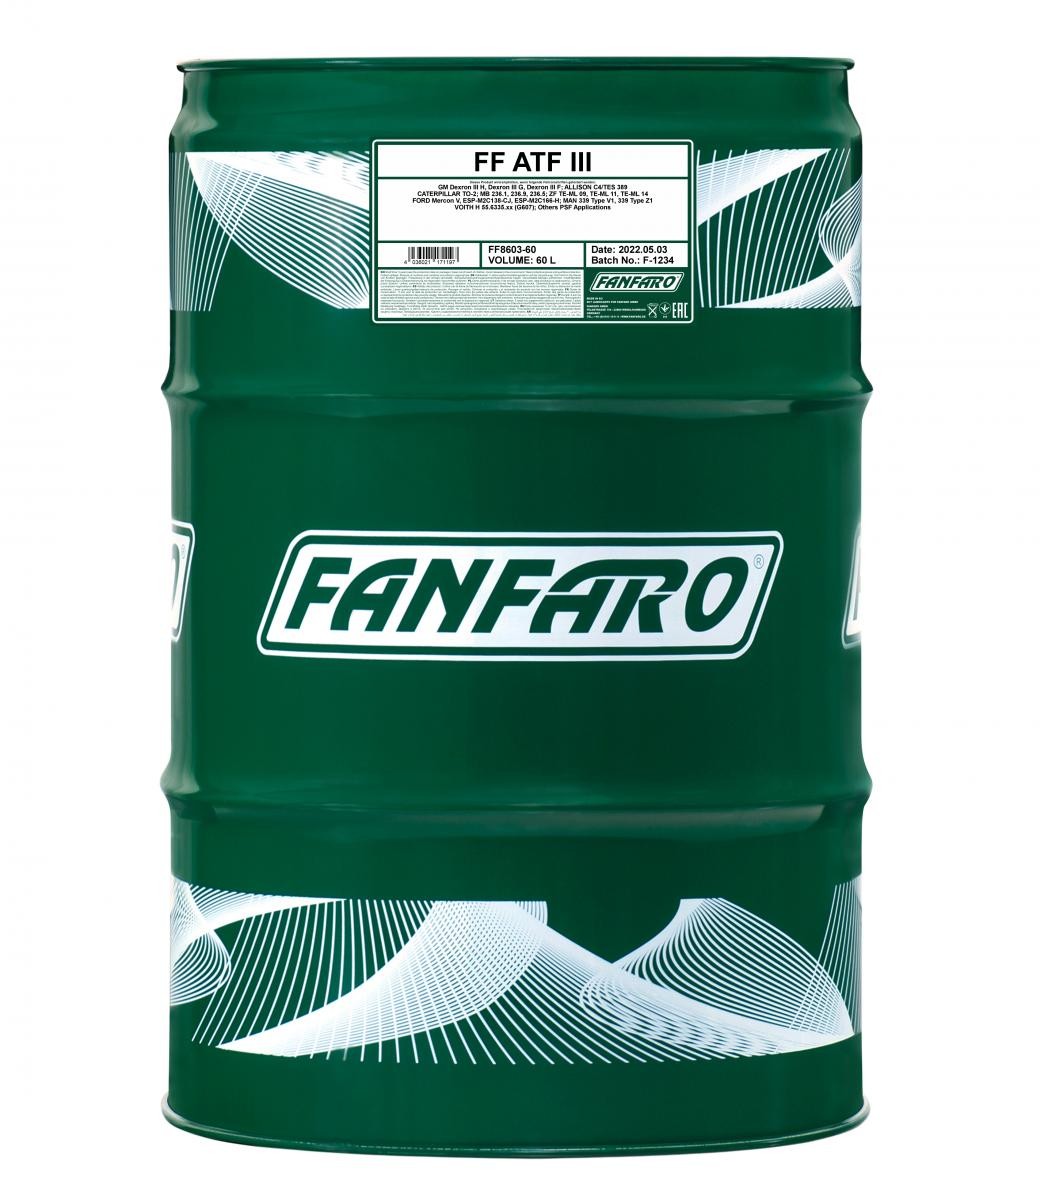 FF8603-60 FANFARO Automatikgetriebeöl DAF CF 75